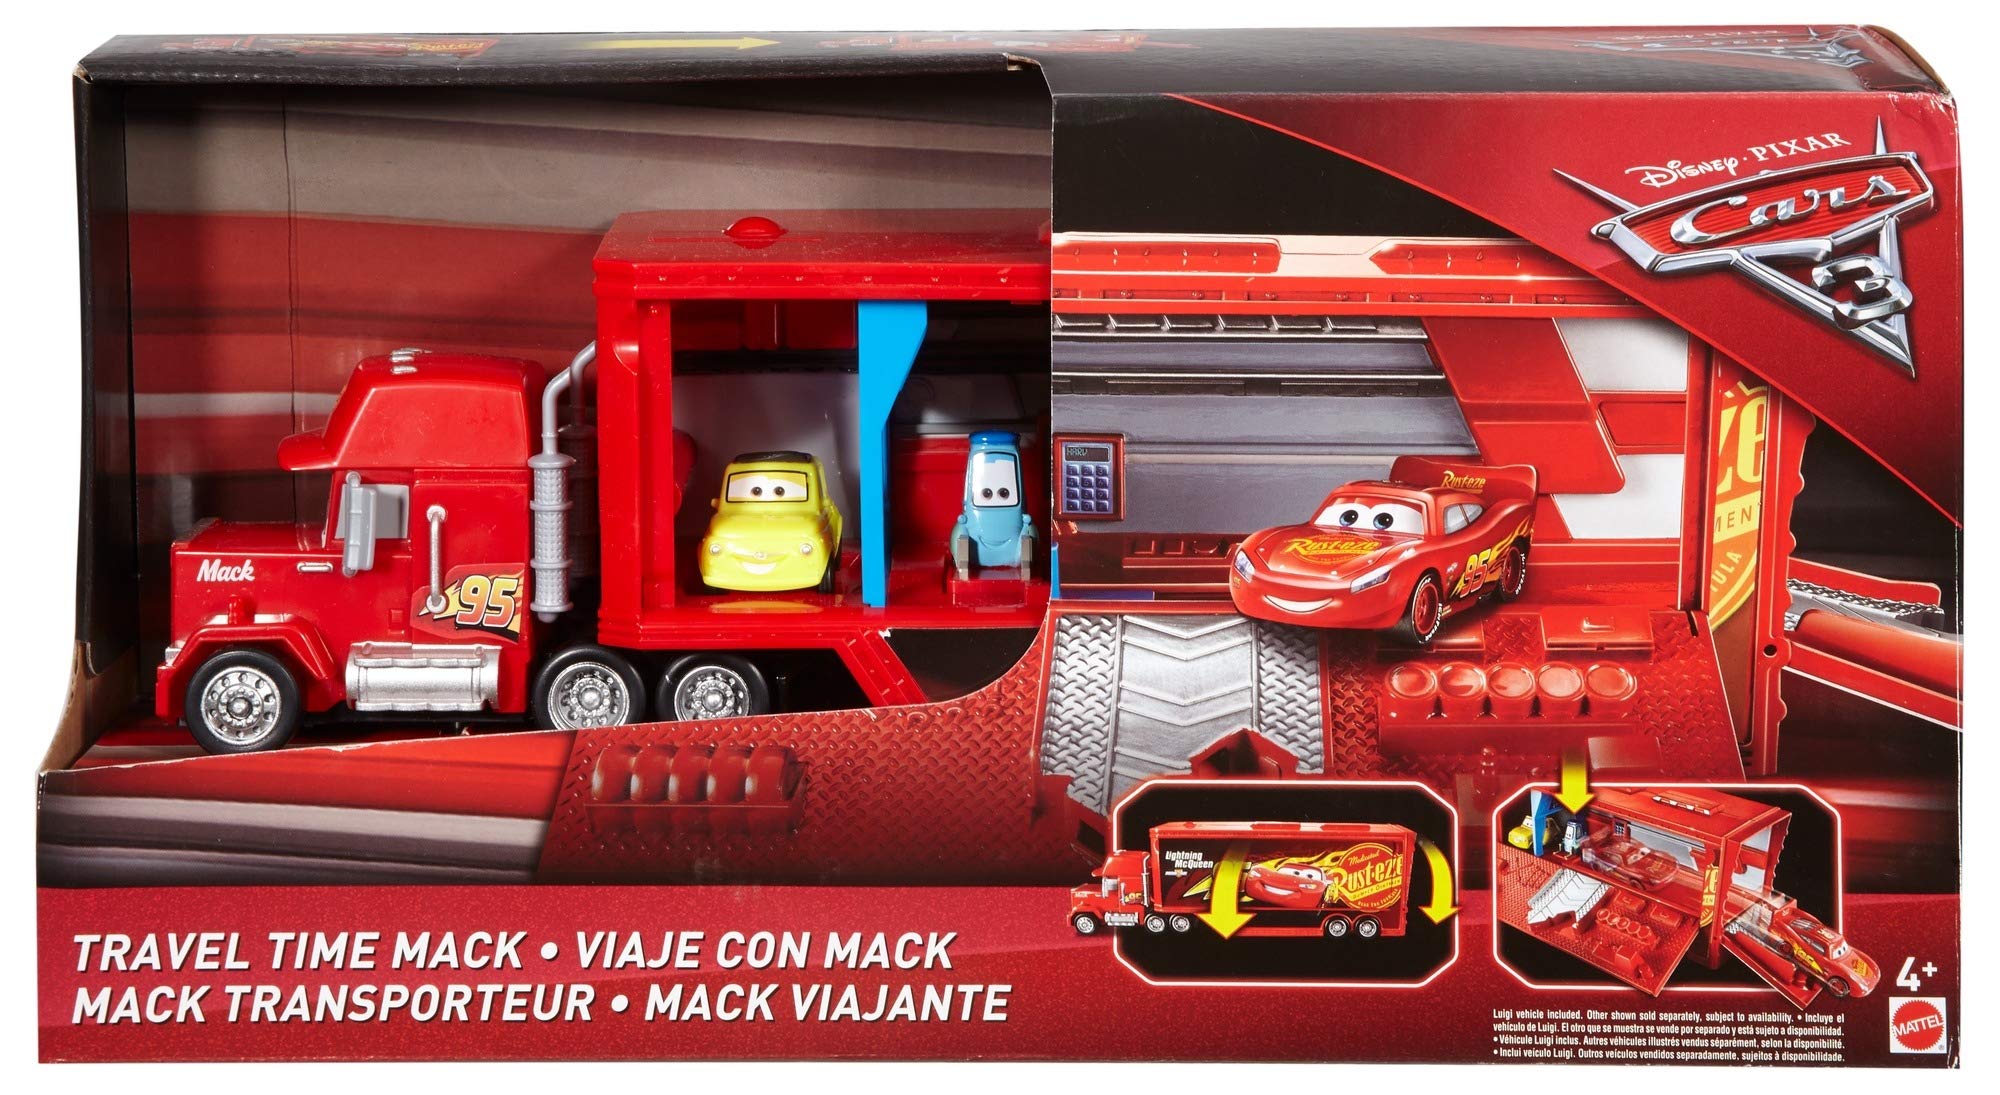 Disney Pixar Cars 3 Travel Time Mack Playset [Amazon Exclusive]